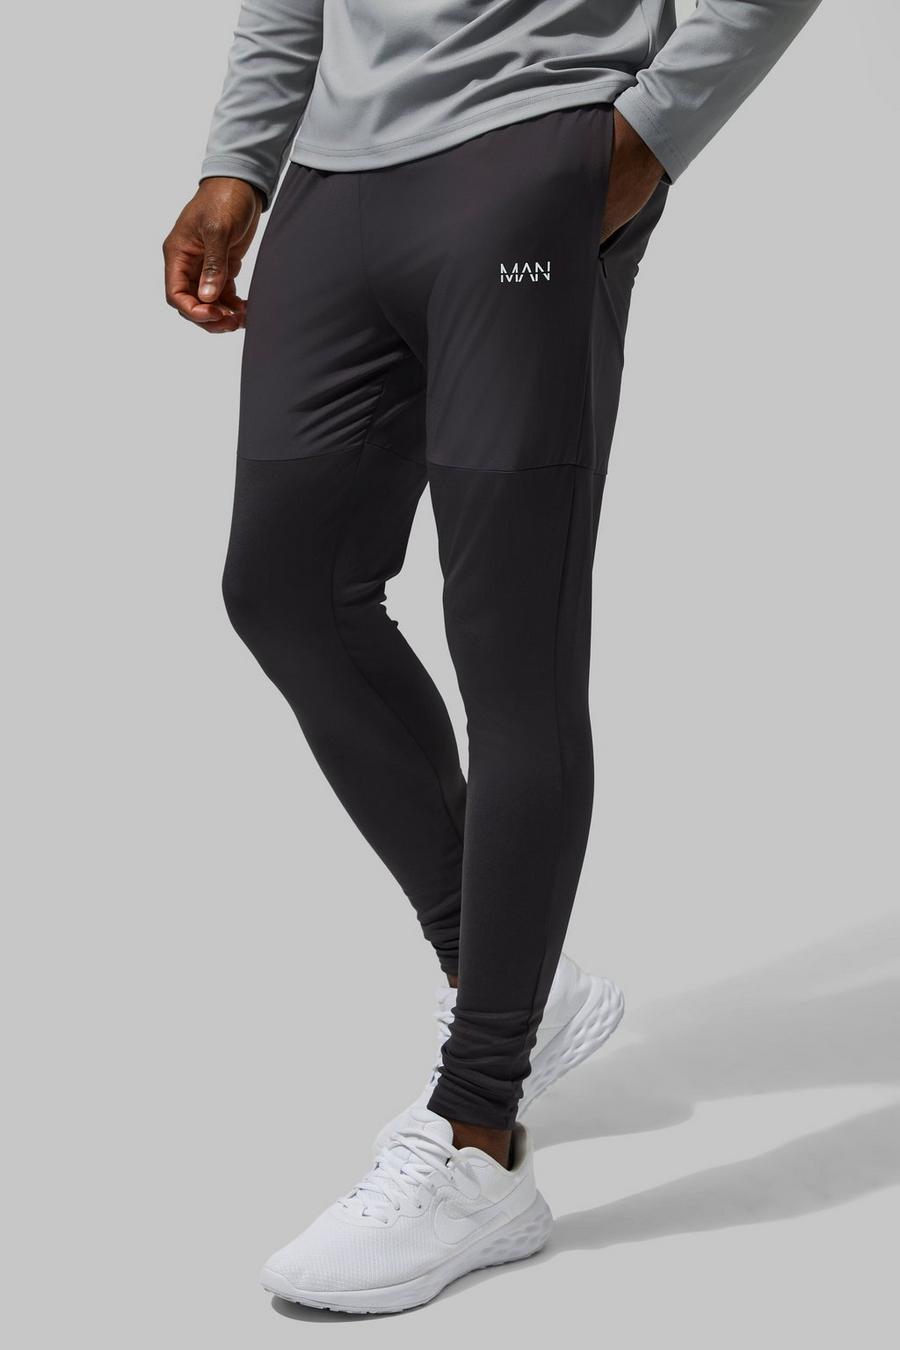 Man Active Performance Leggings, Charcoal gris